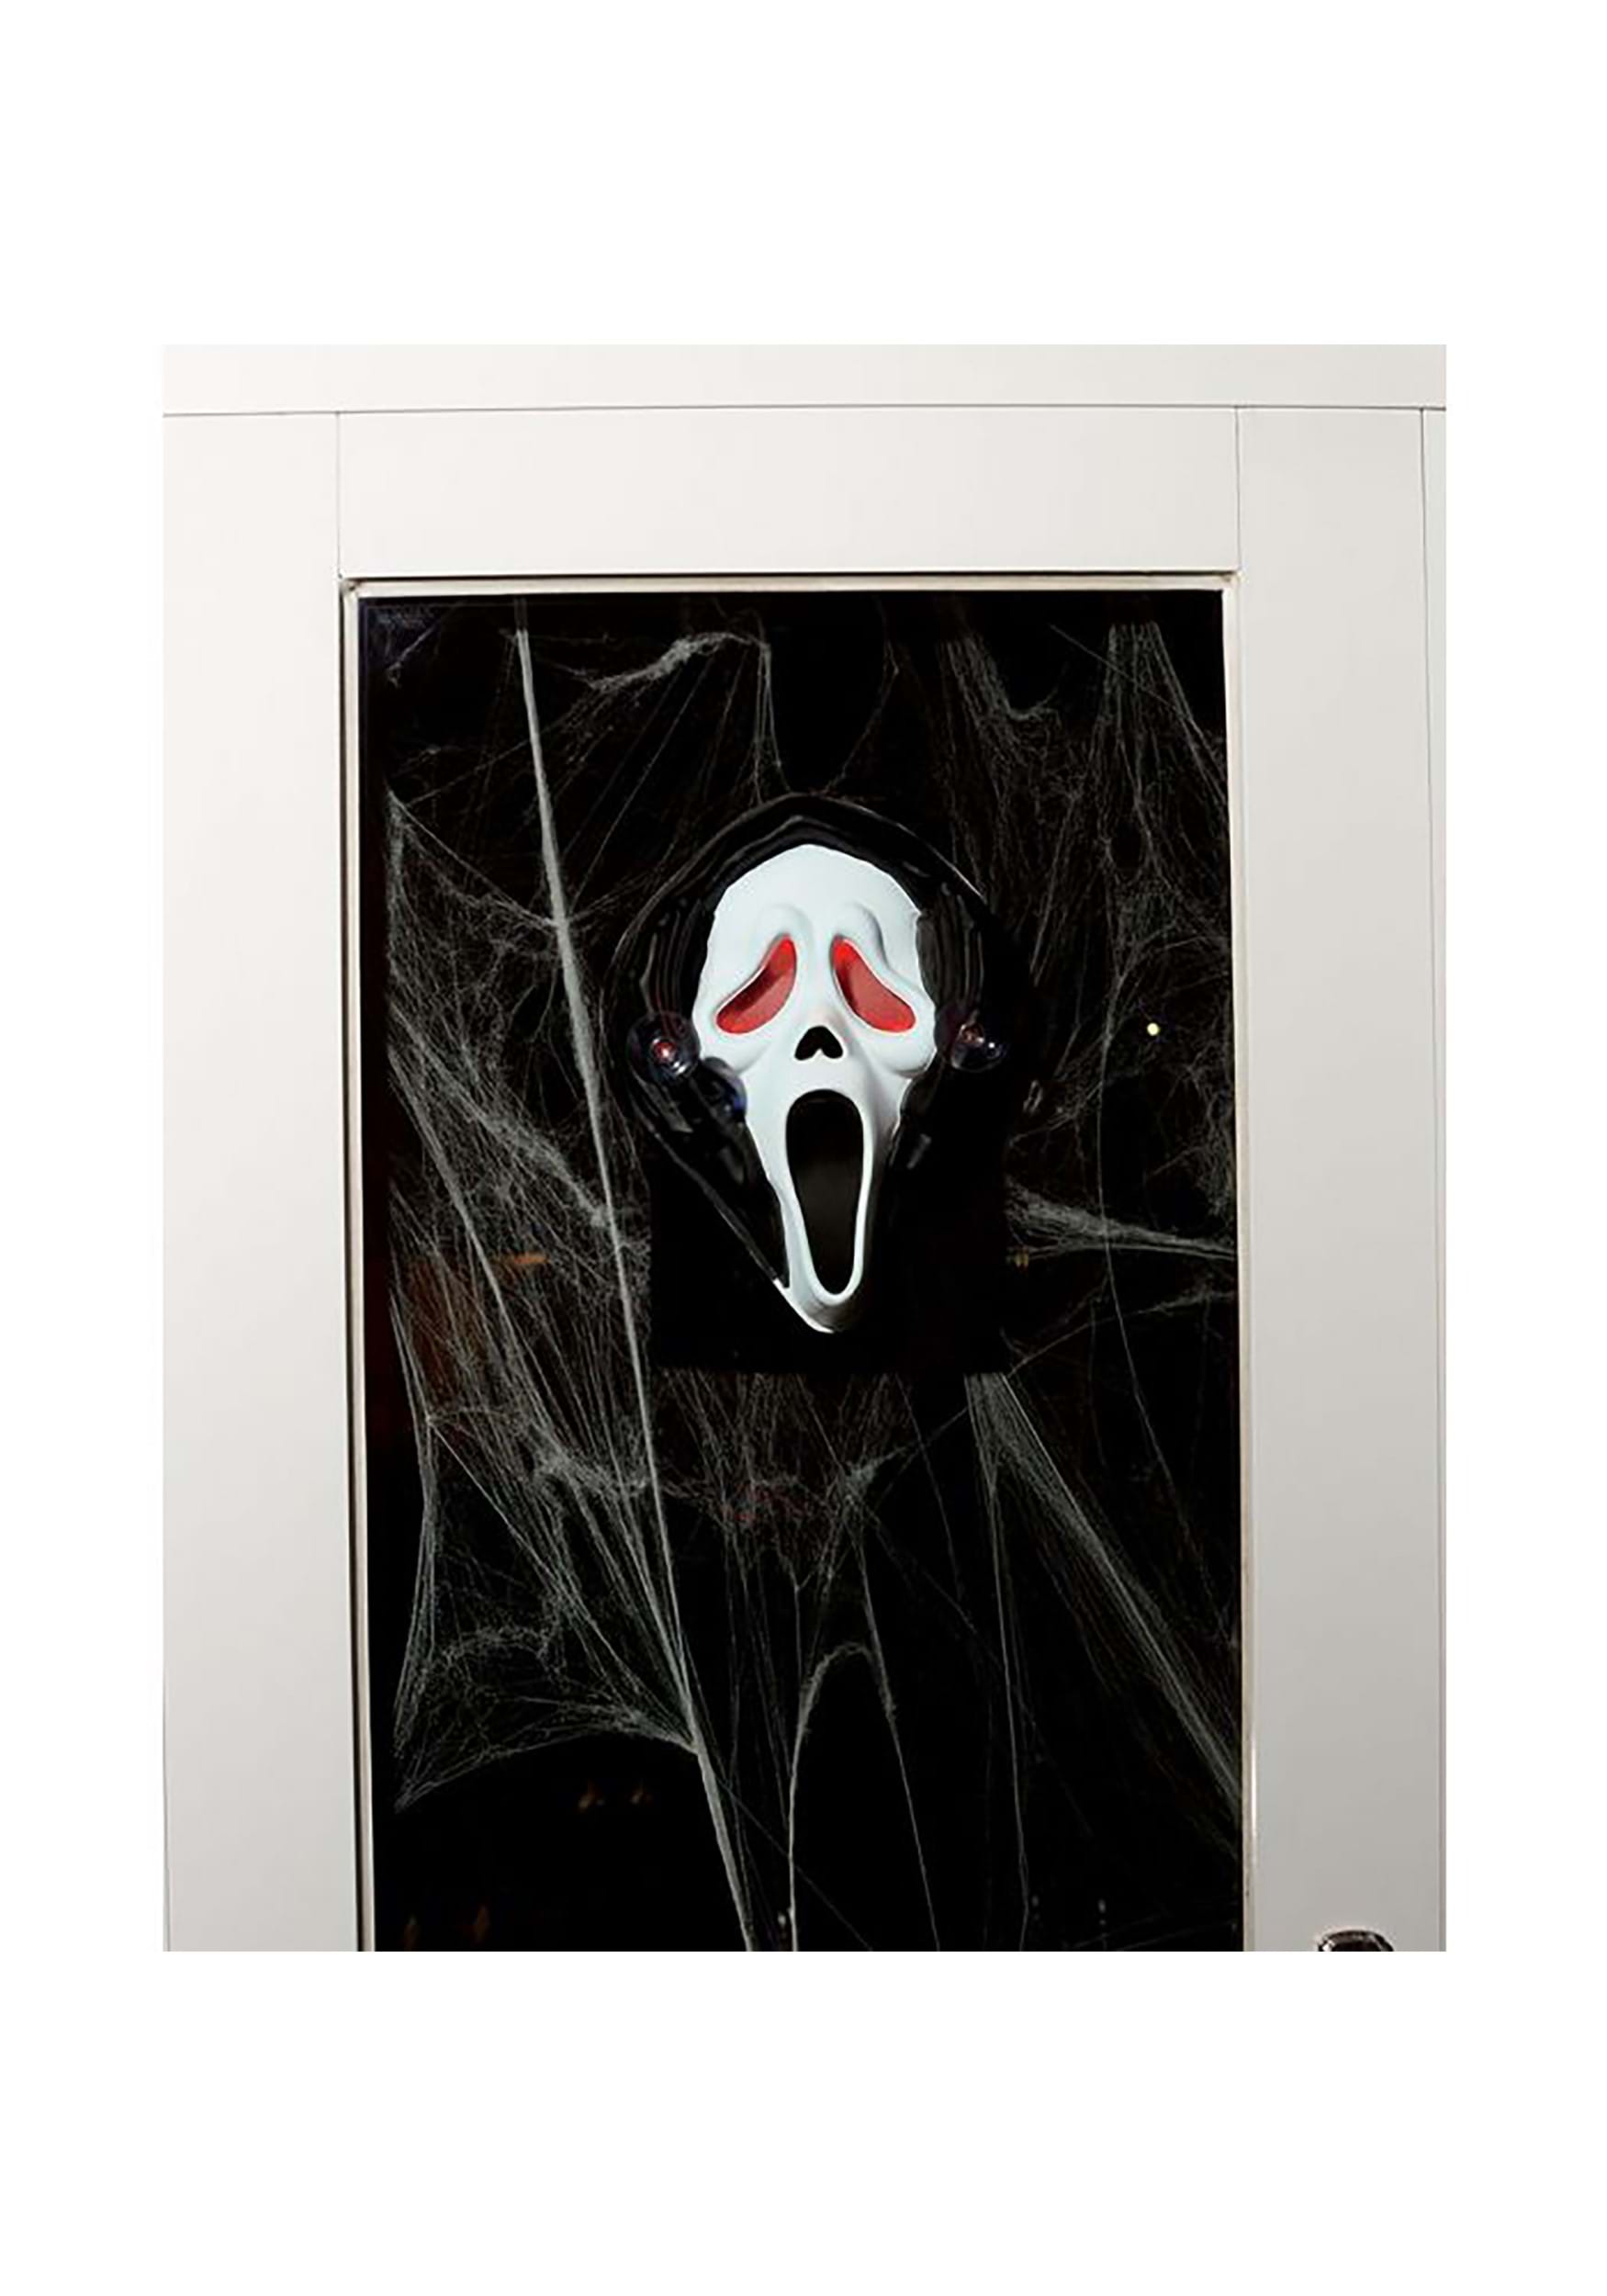 Ghost Face Window Peeper Halloween Prop , Horror Movie Decorations